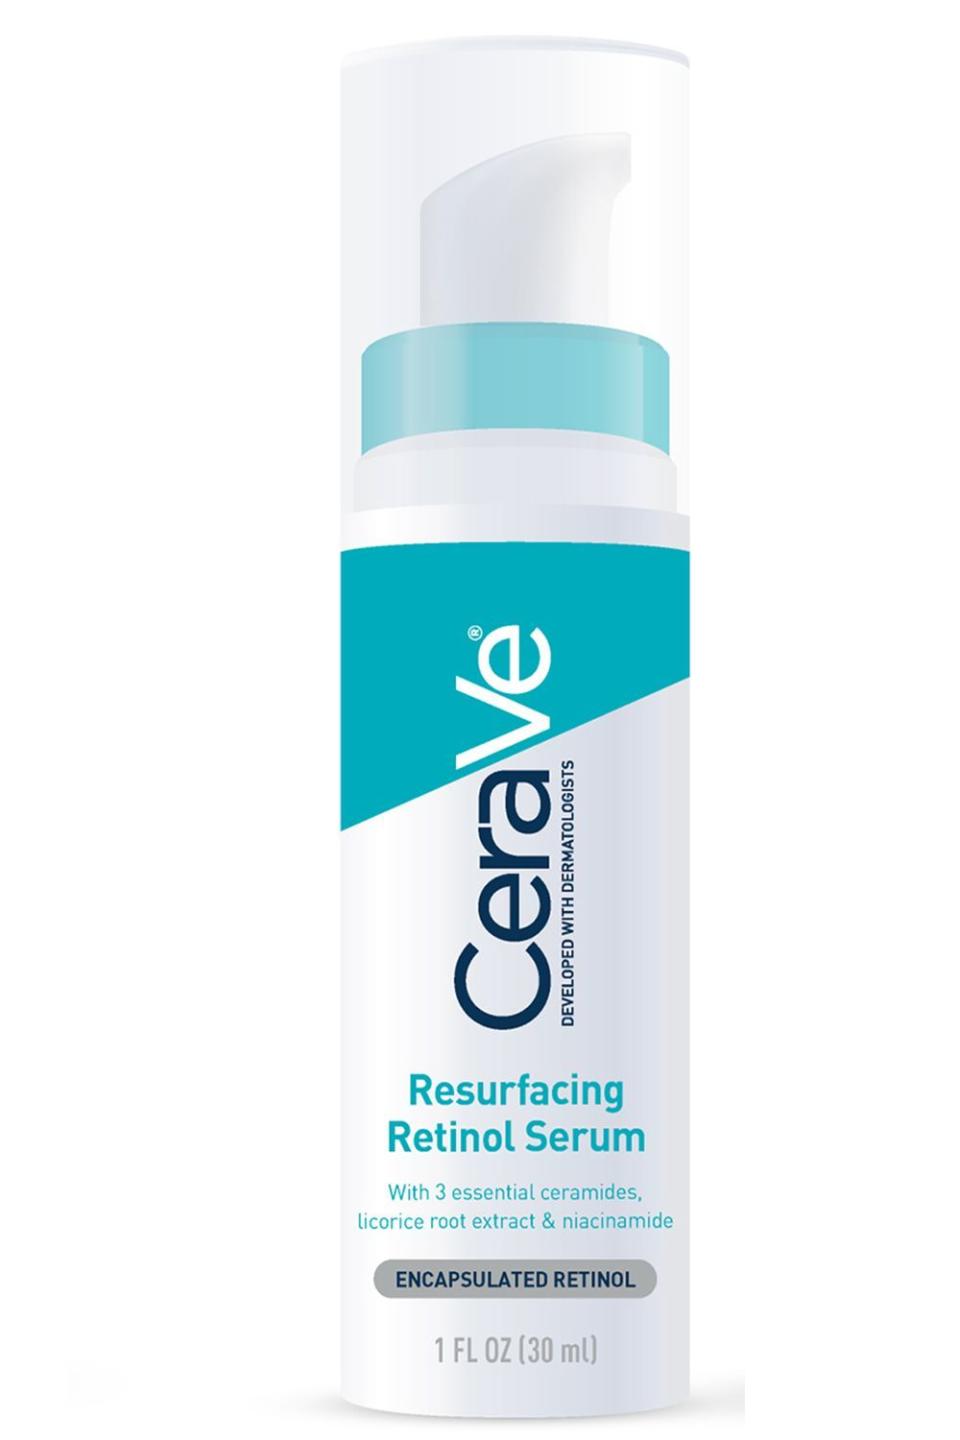 3) CeraVe Resurfacing Retinol Serum